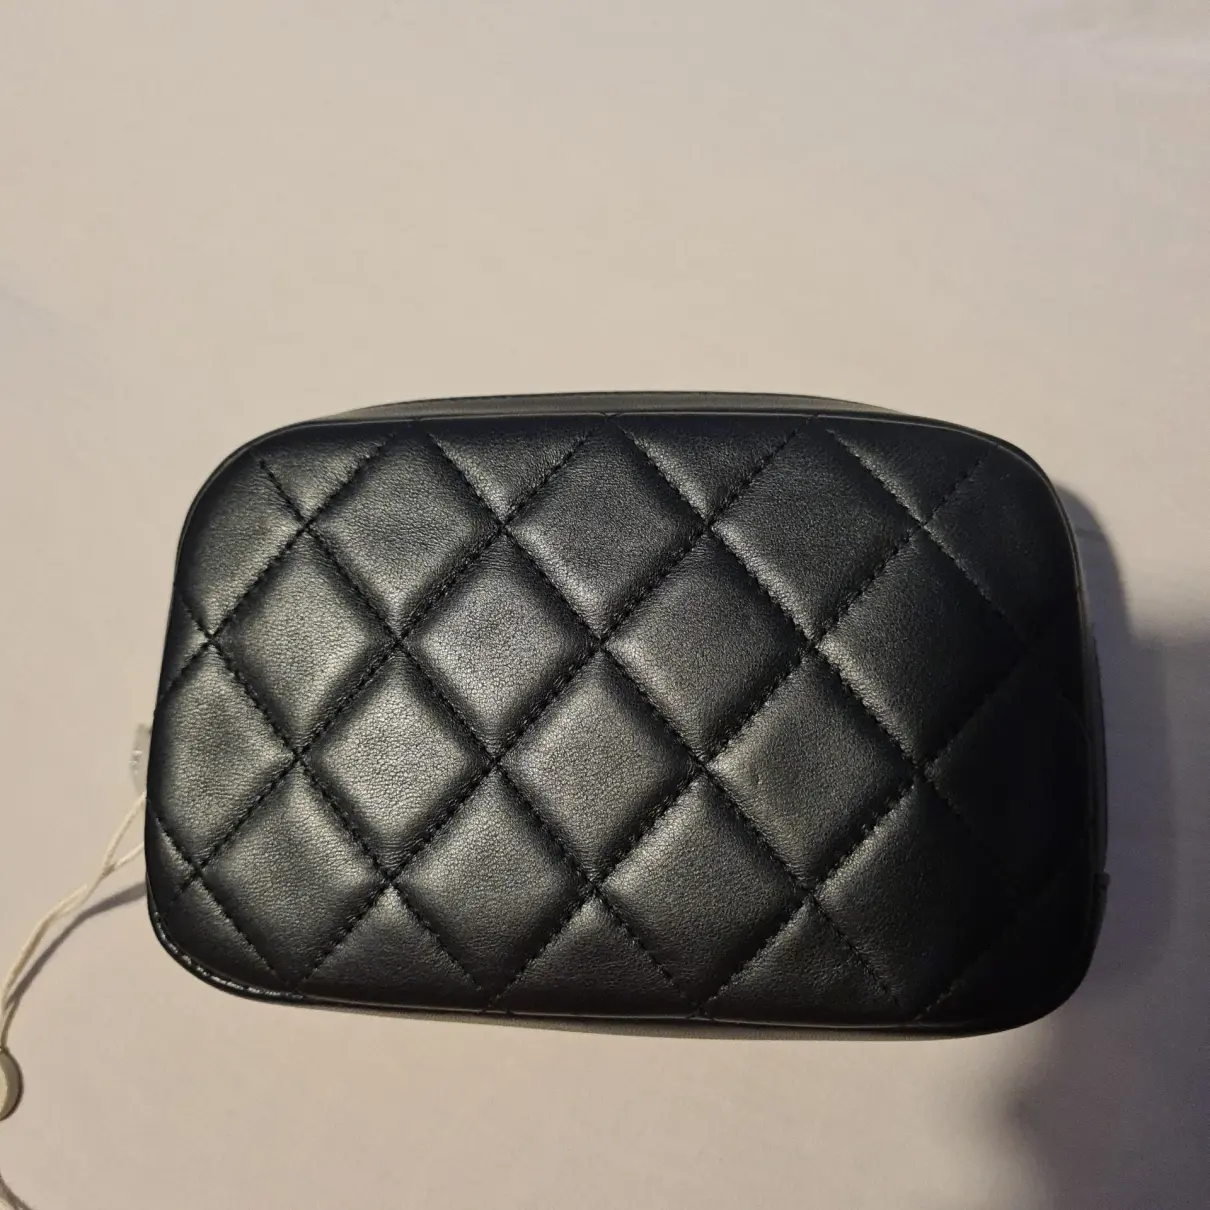 Buy Chanel Leather travel bag online